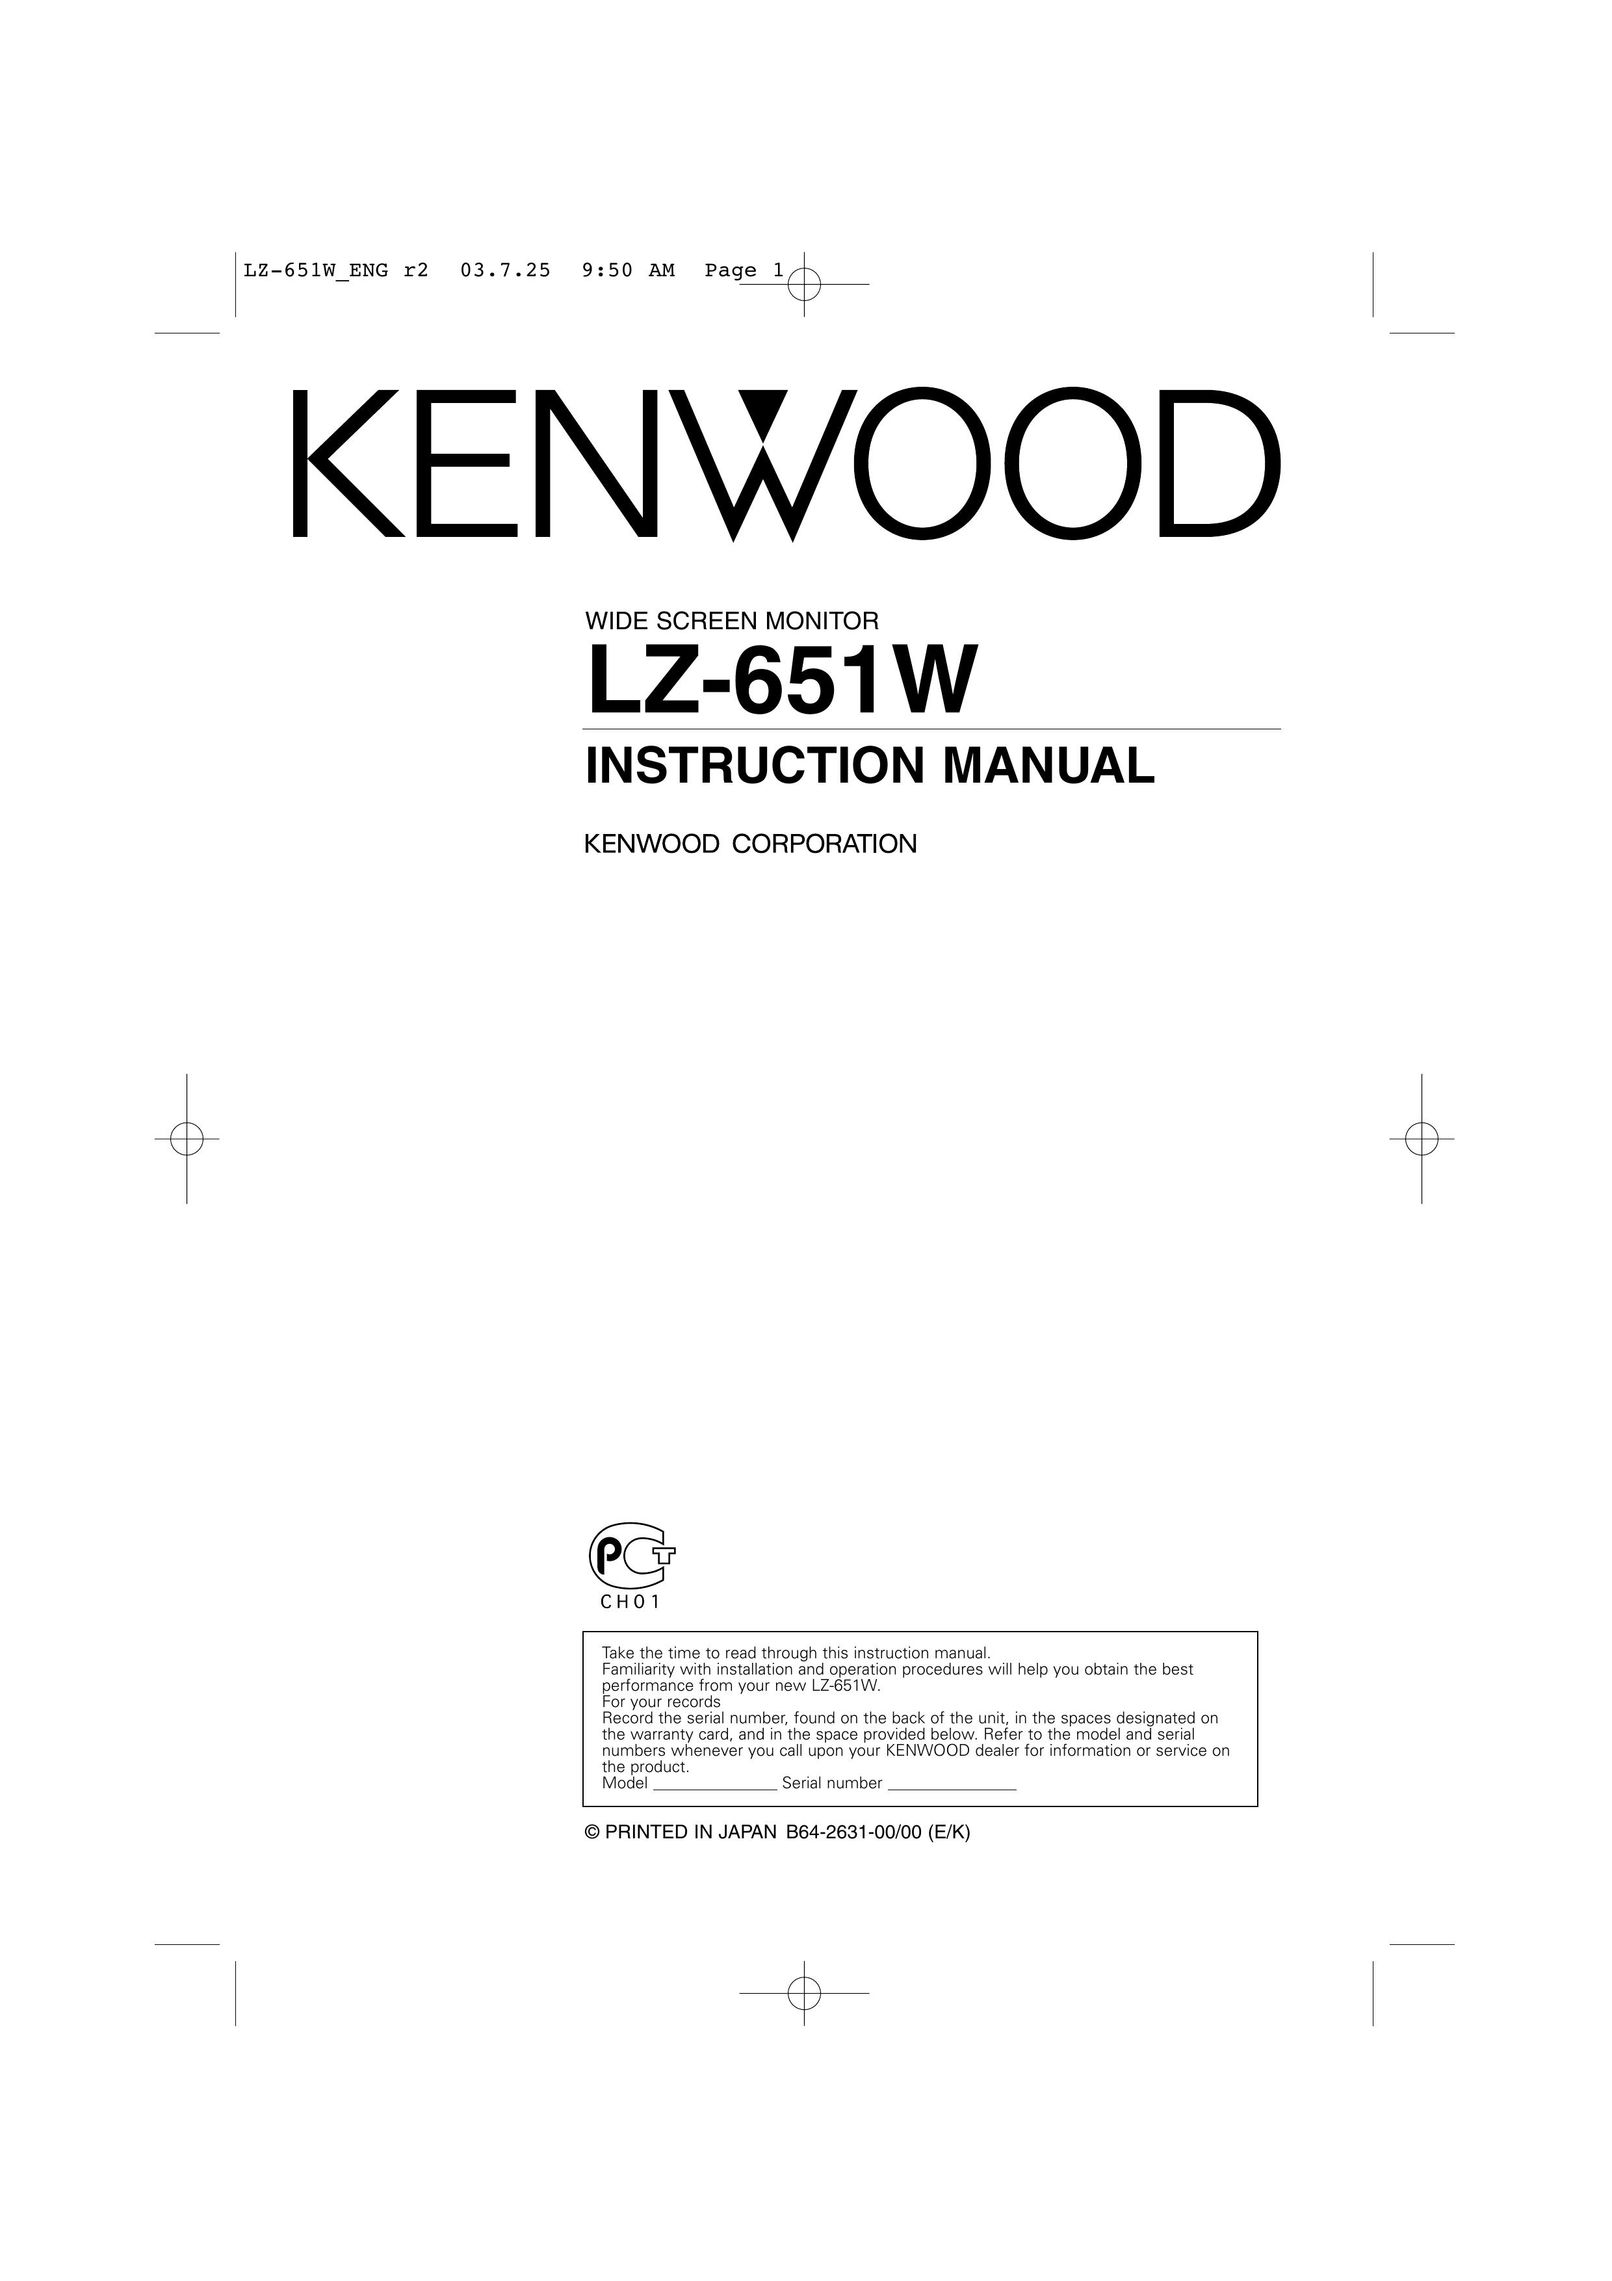 Kenwood LZ-651W Computer Monitor User Manual